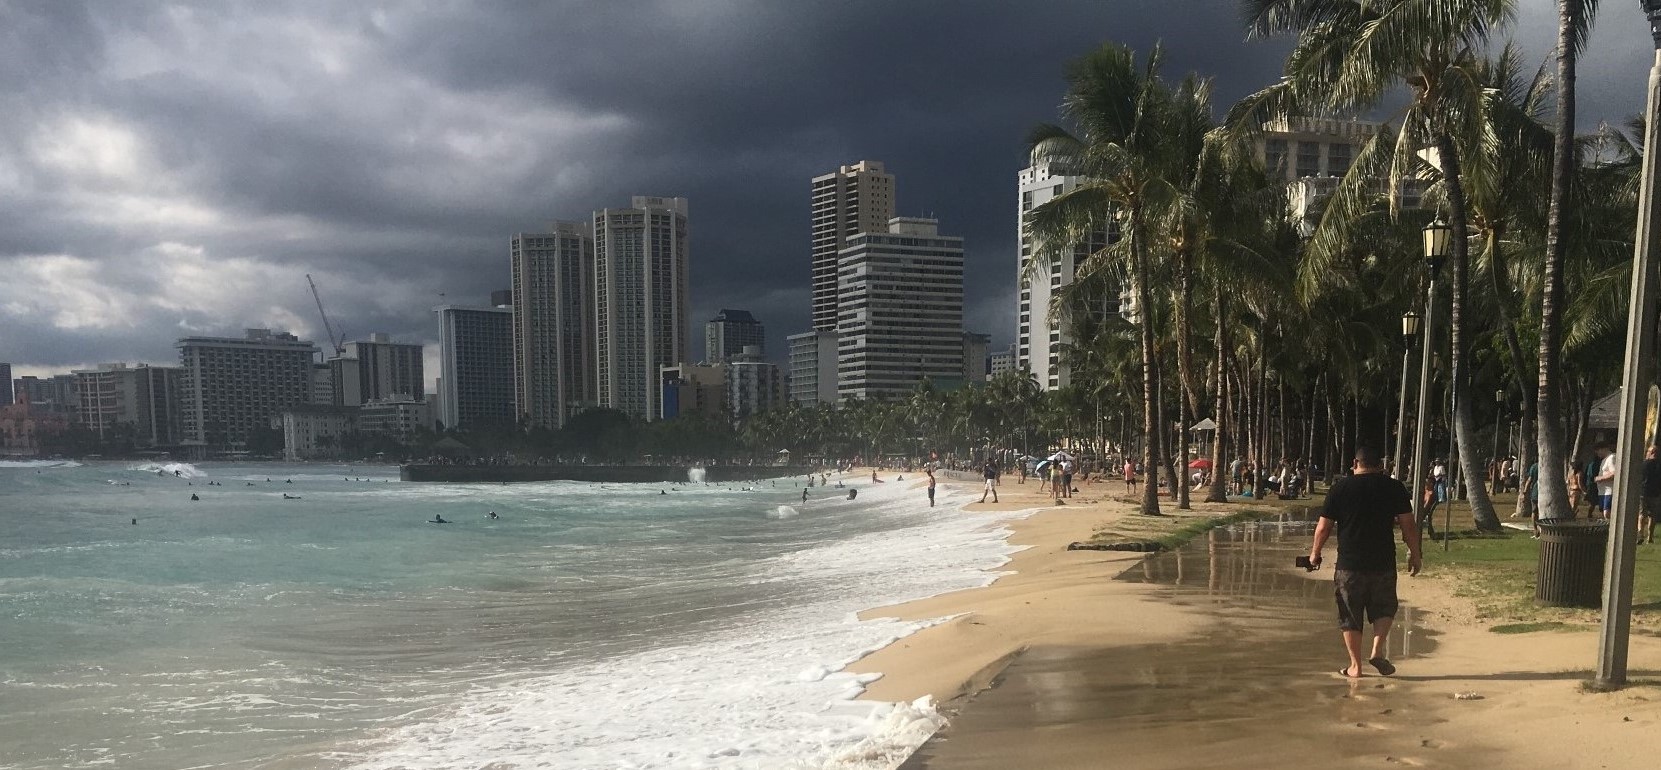 Very dark storm clouds arrive over Waikiki beach